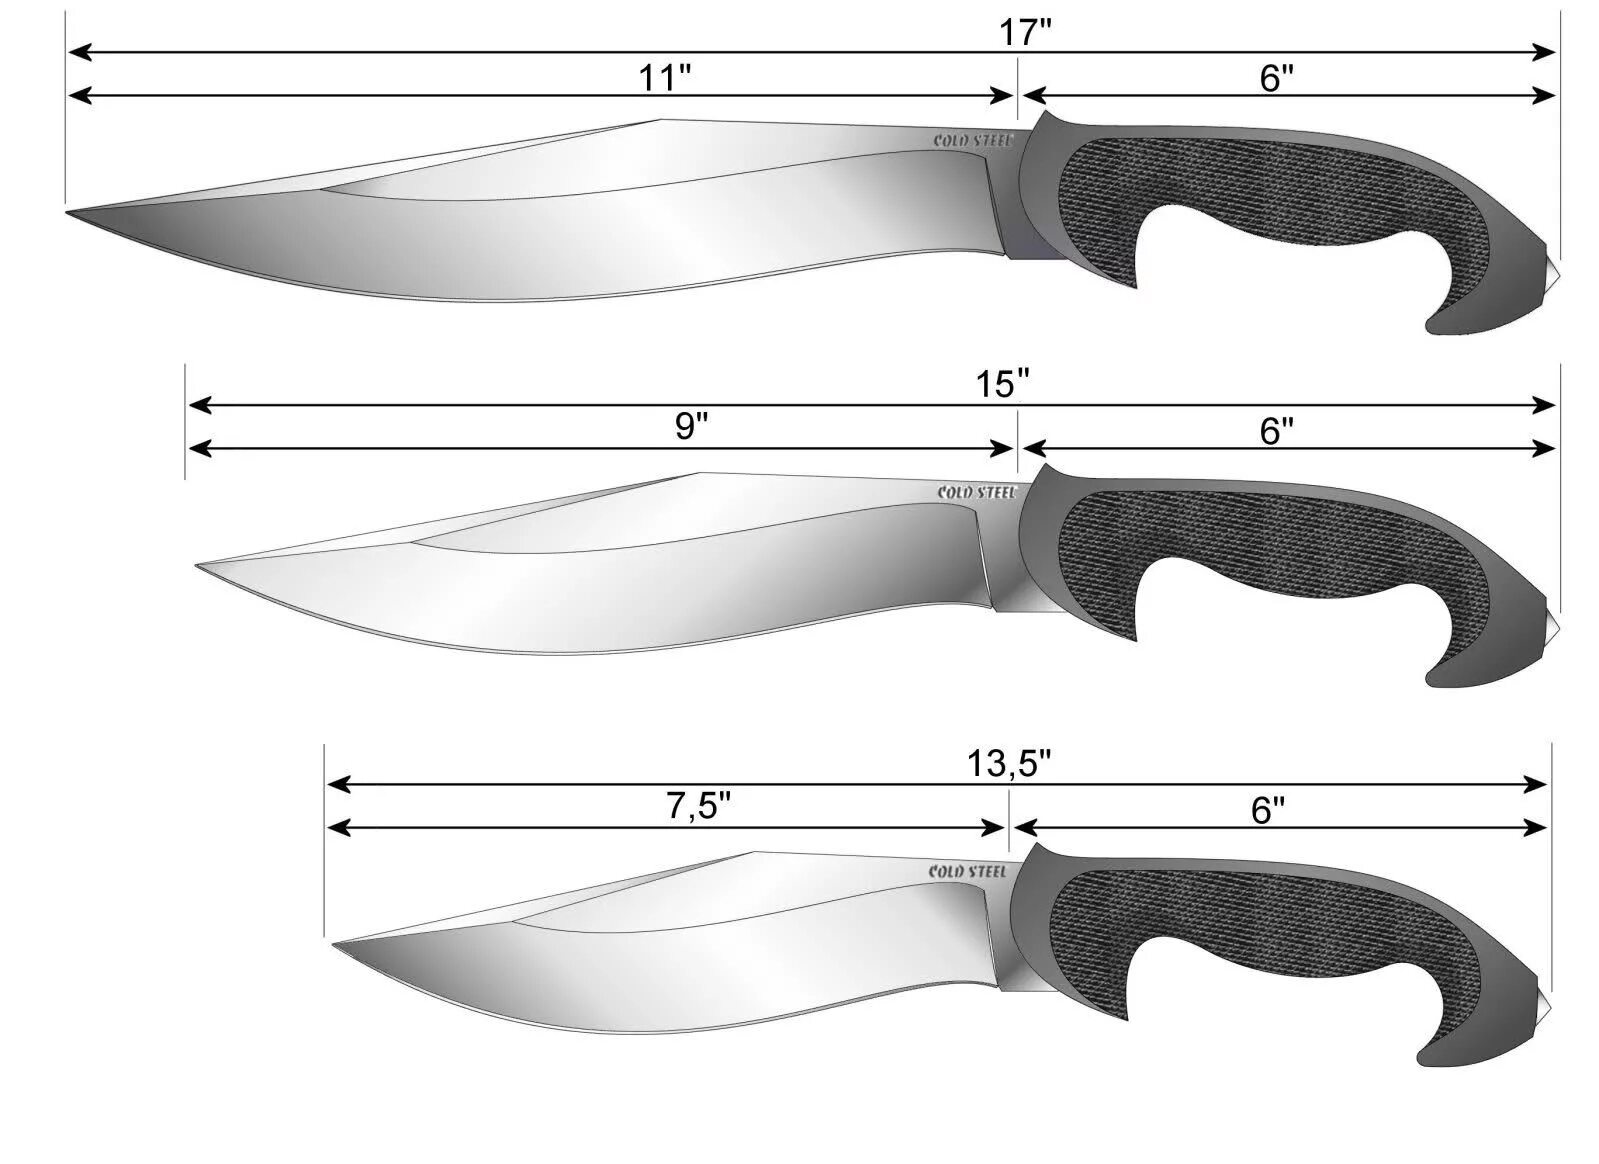 Размеры лезвий ножей. Охотничьи ножи Боуи чертеж. Нож шкуродер чертеж. Cold Steel ножи чертеж. Нож шкуродер чертеж с размерами.